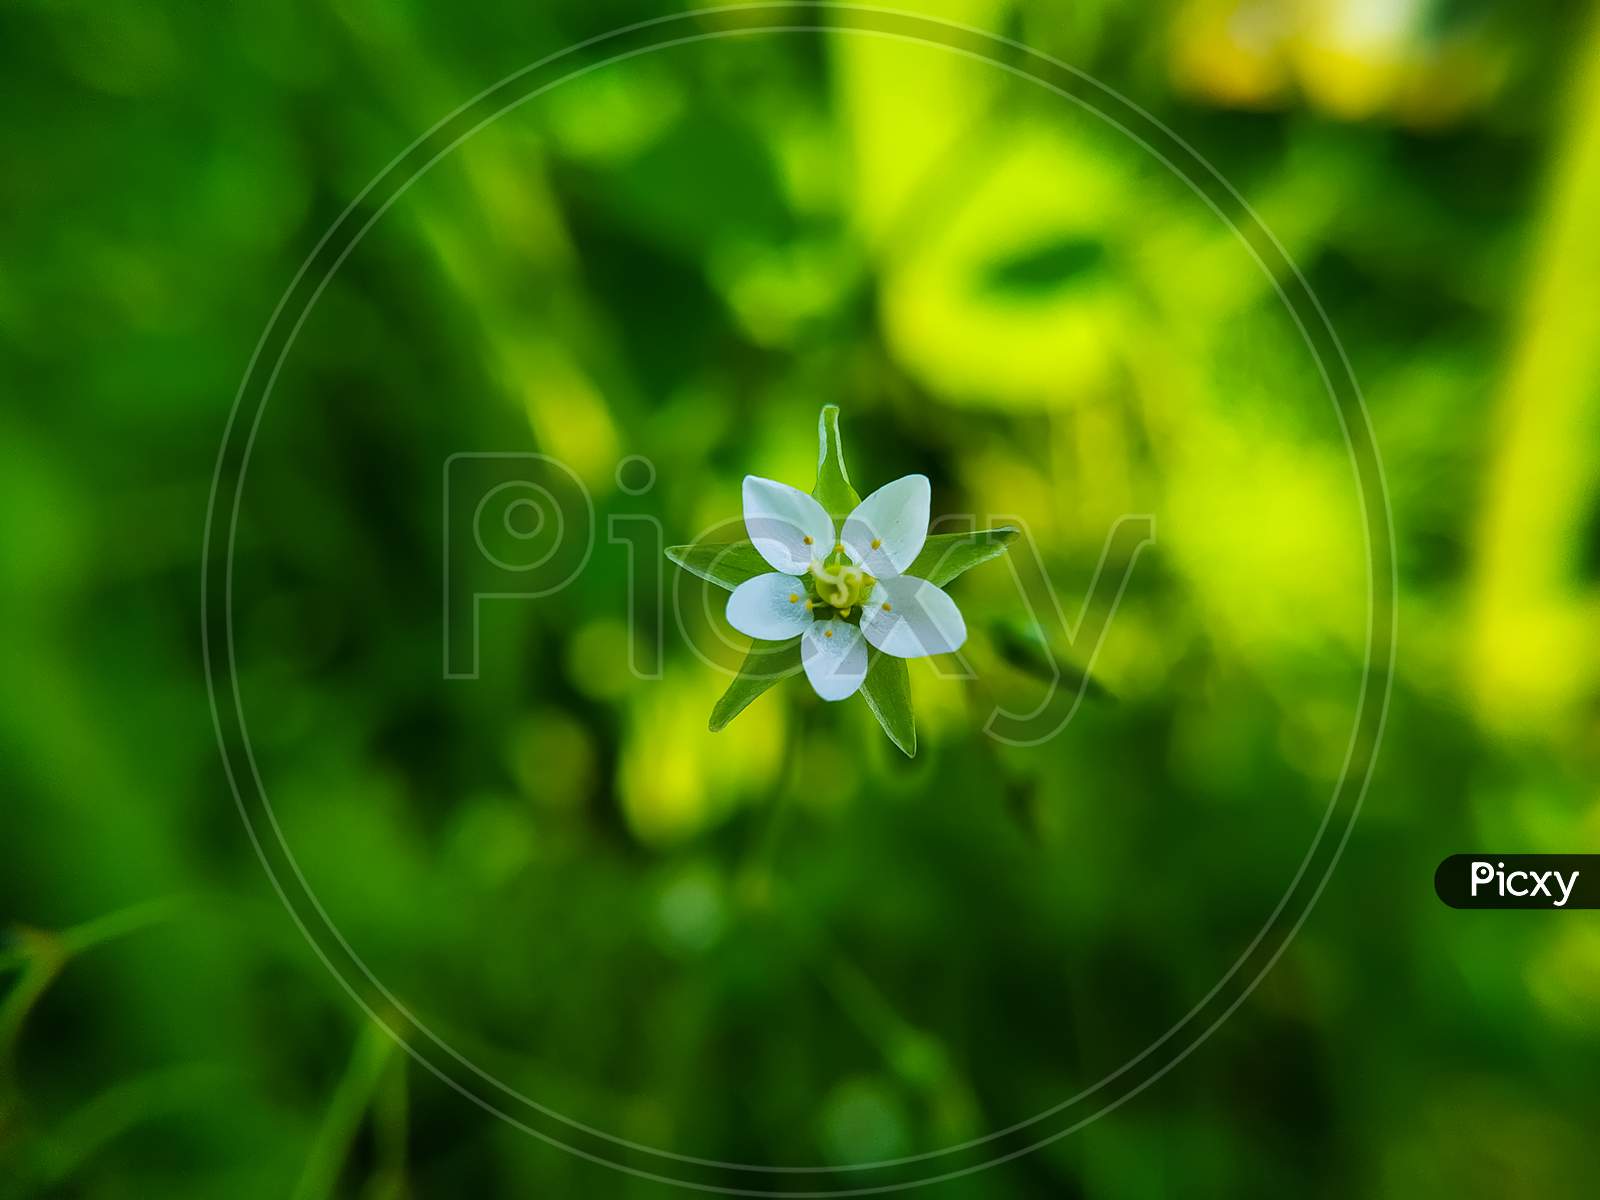 Spergula Arvensis - Corn Spurrey Blooming On Green Blurred Background